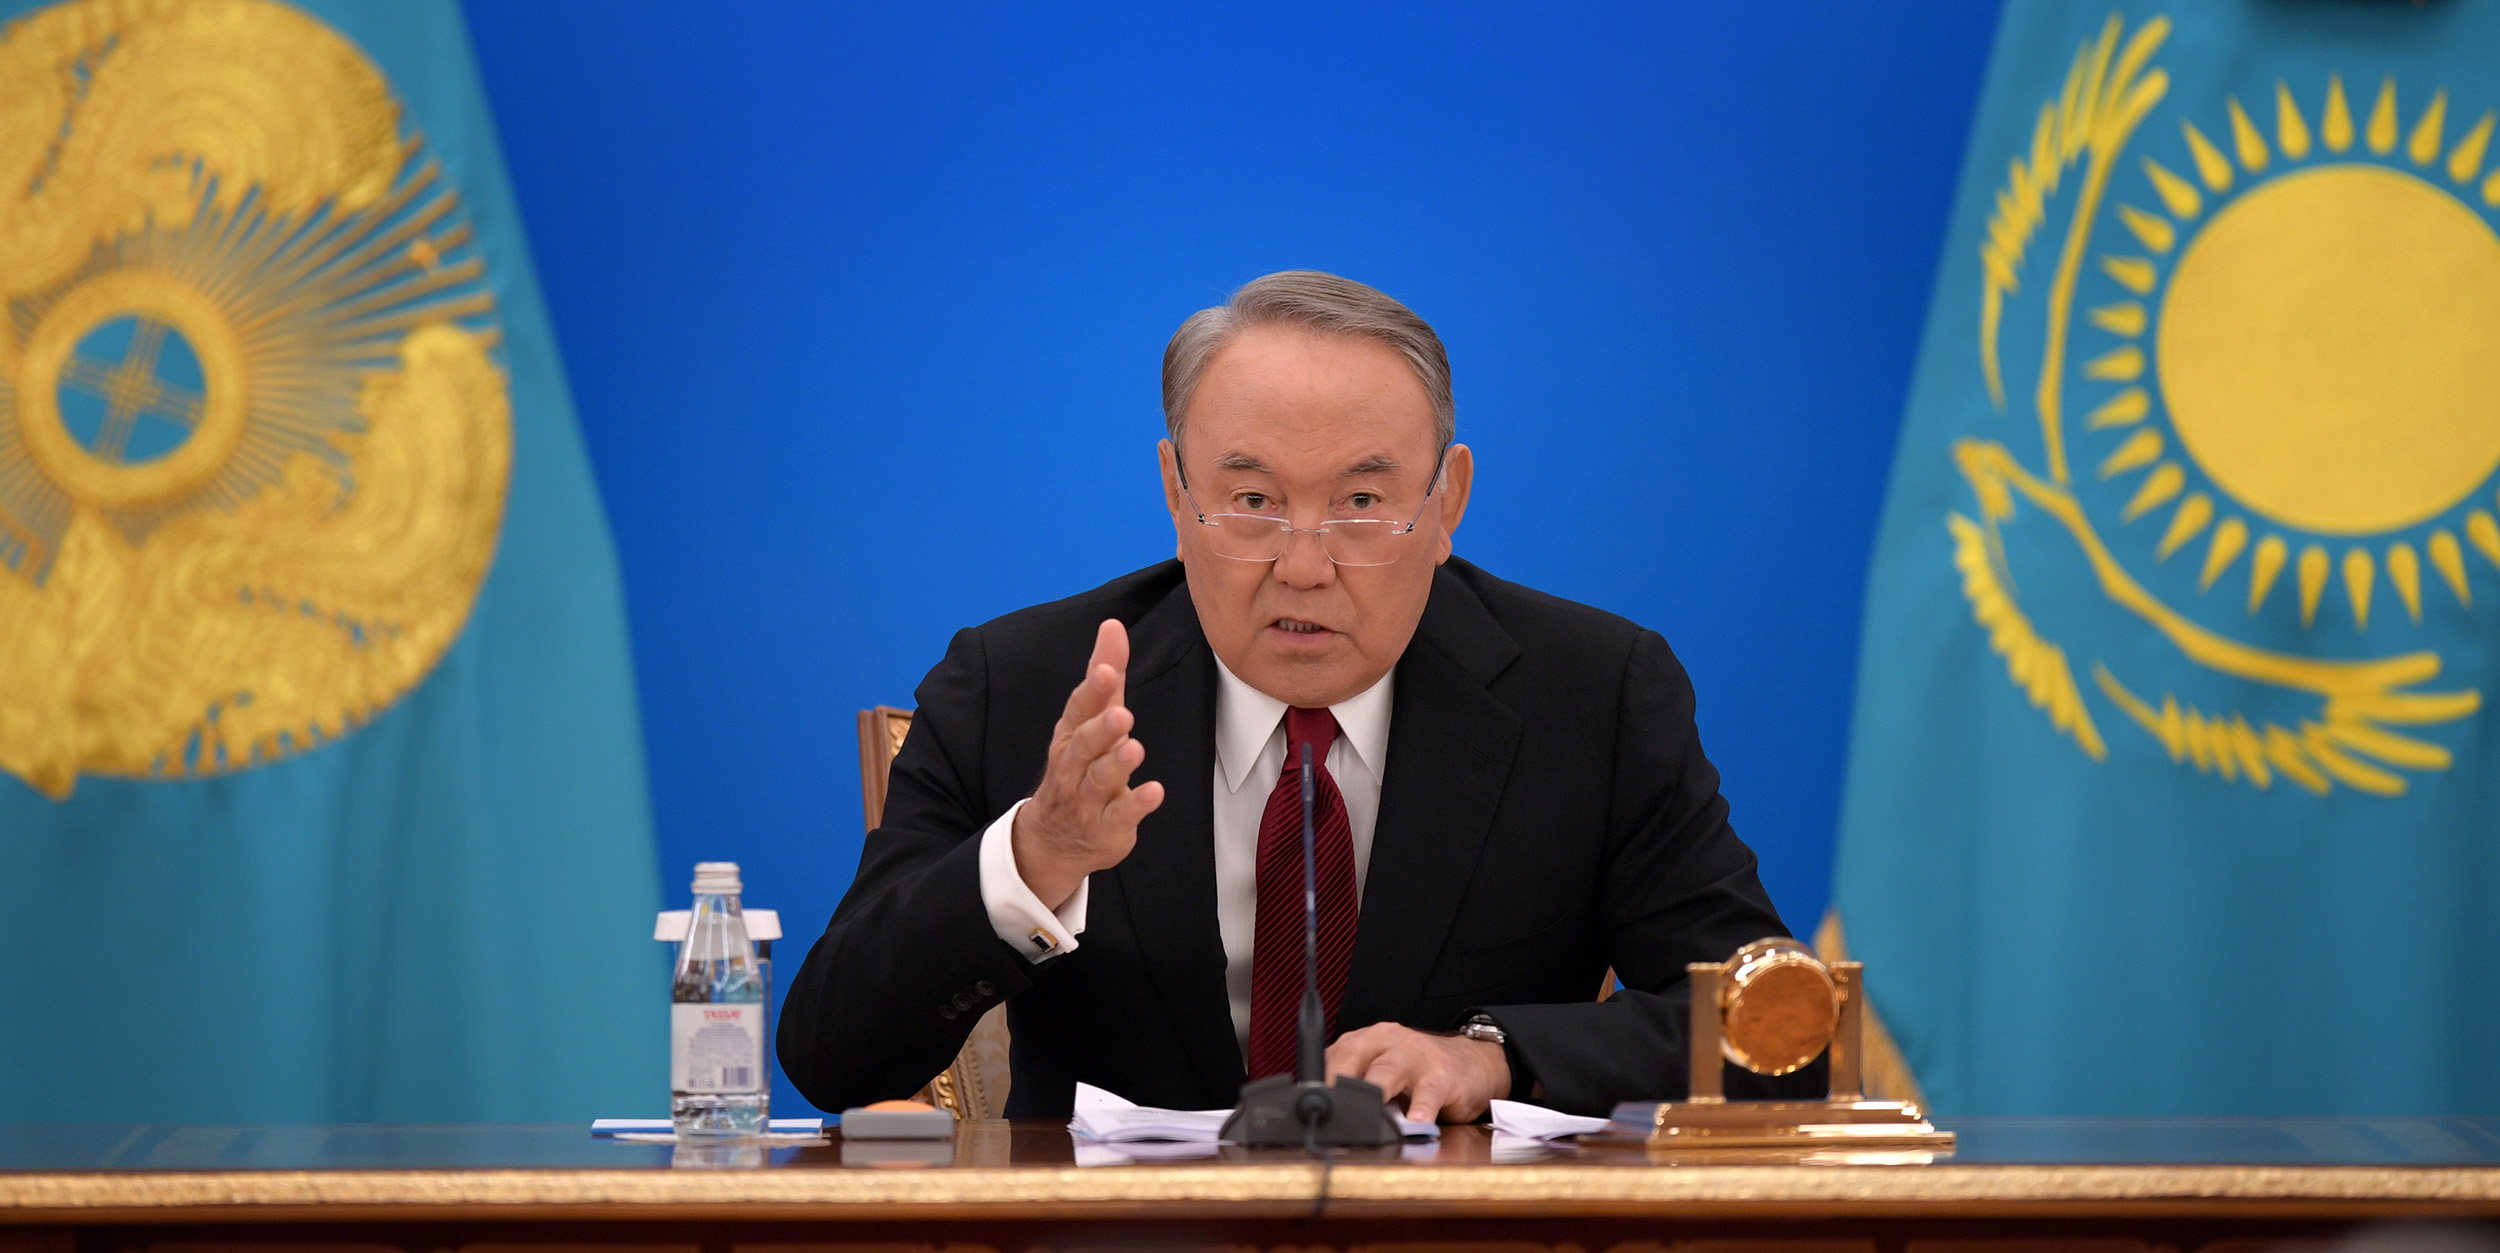 State of the Nation Address of President of the Republic of Kazakhstan Nursultan Nazarbayev, October 5, 2018